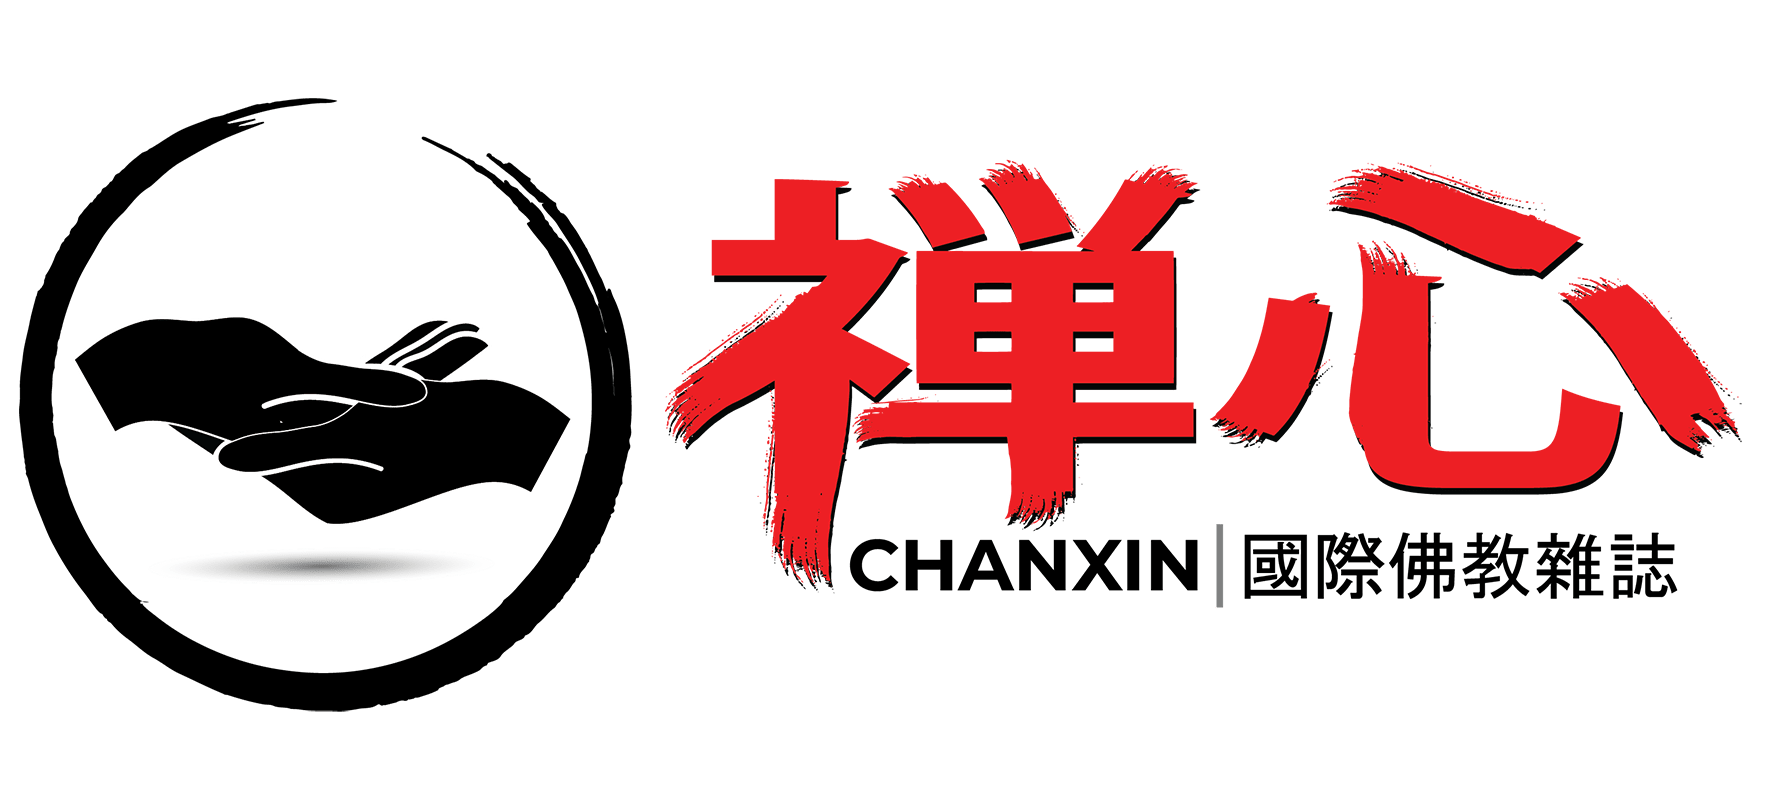 #chanxinmagazineofficiallogo